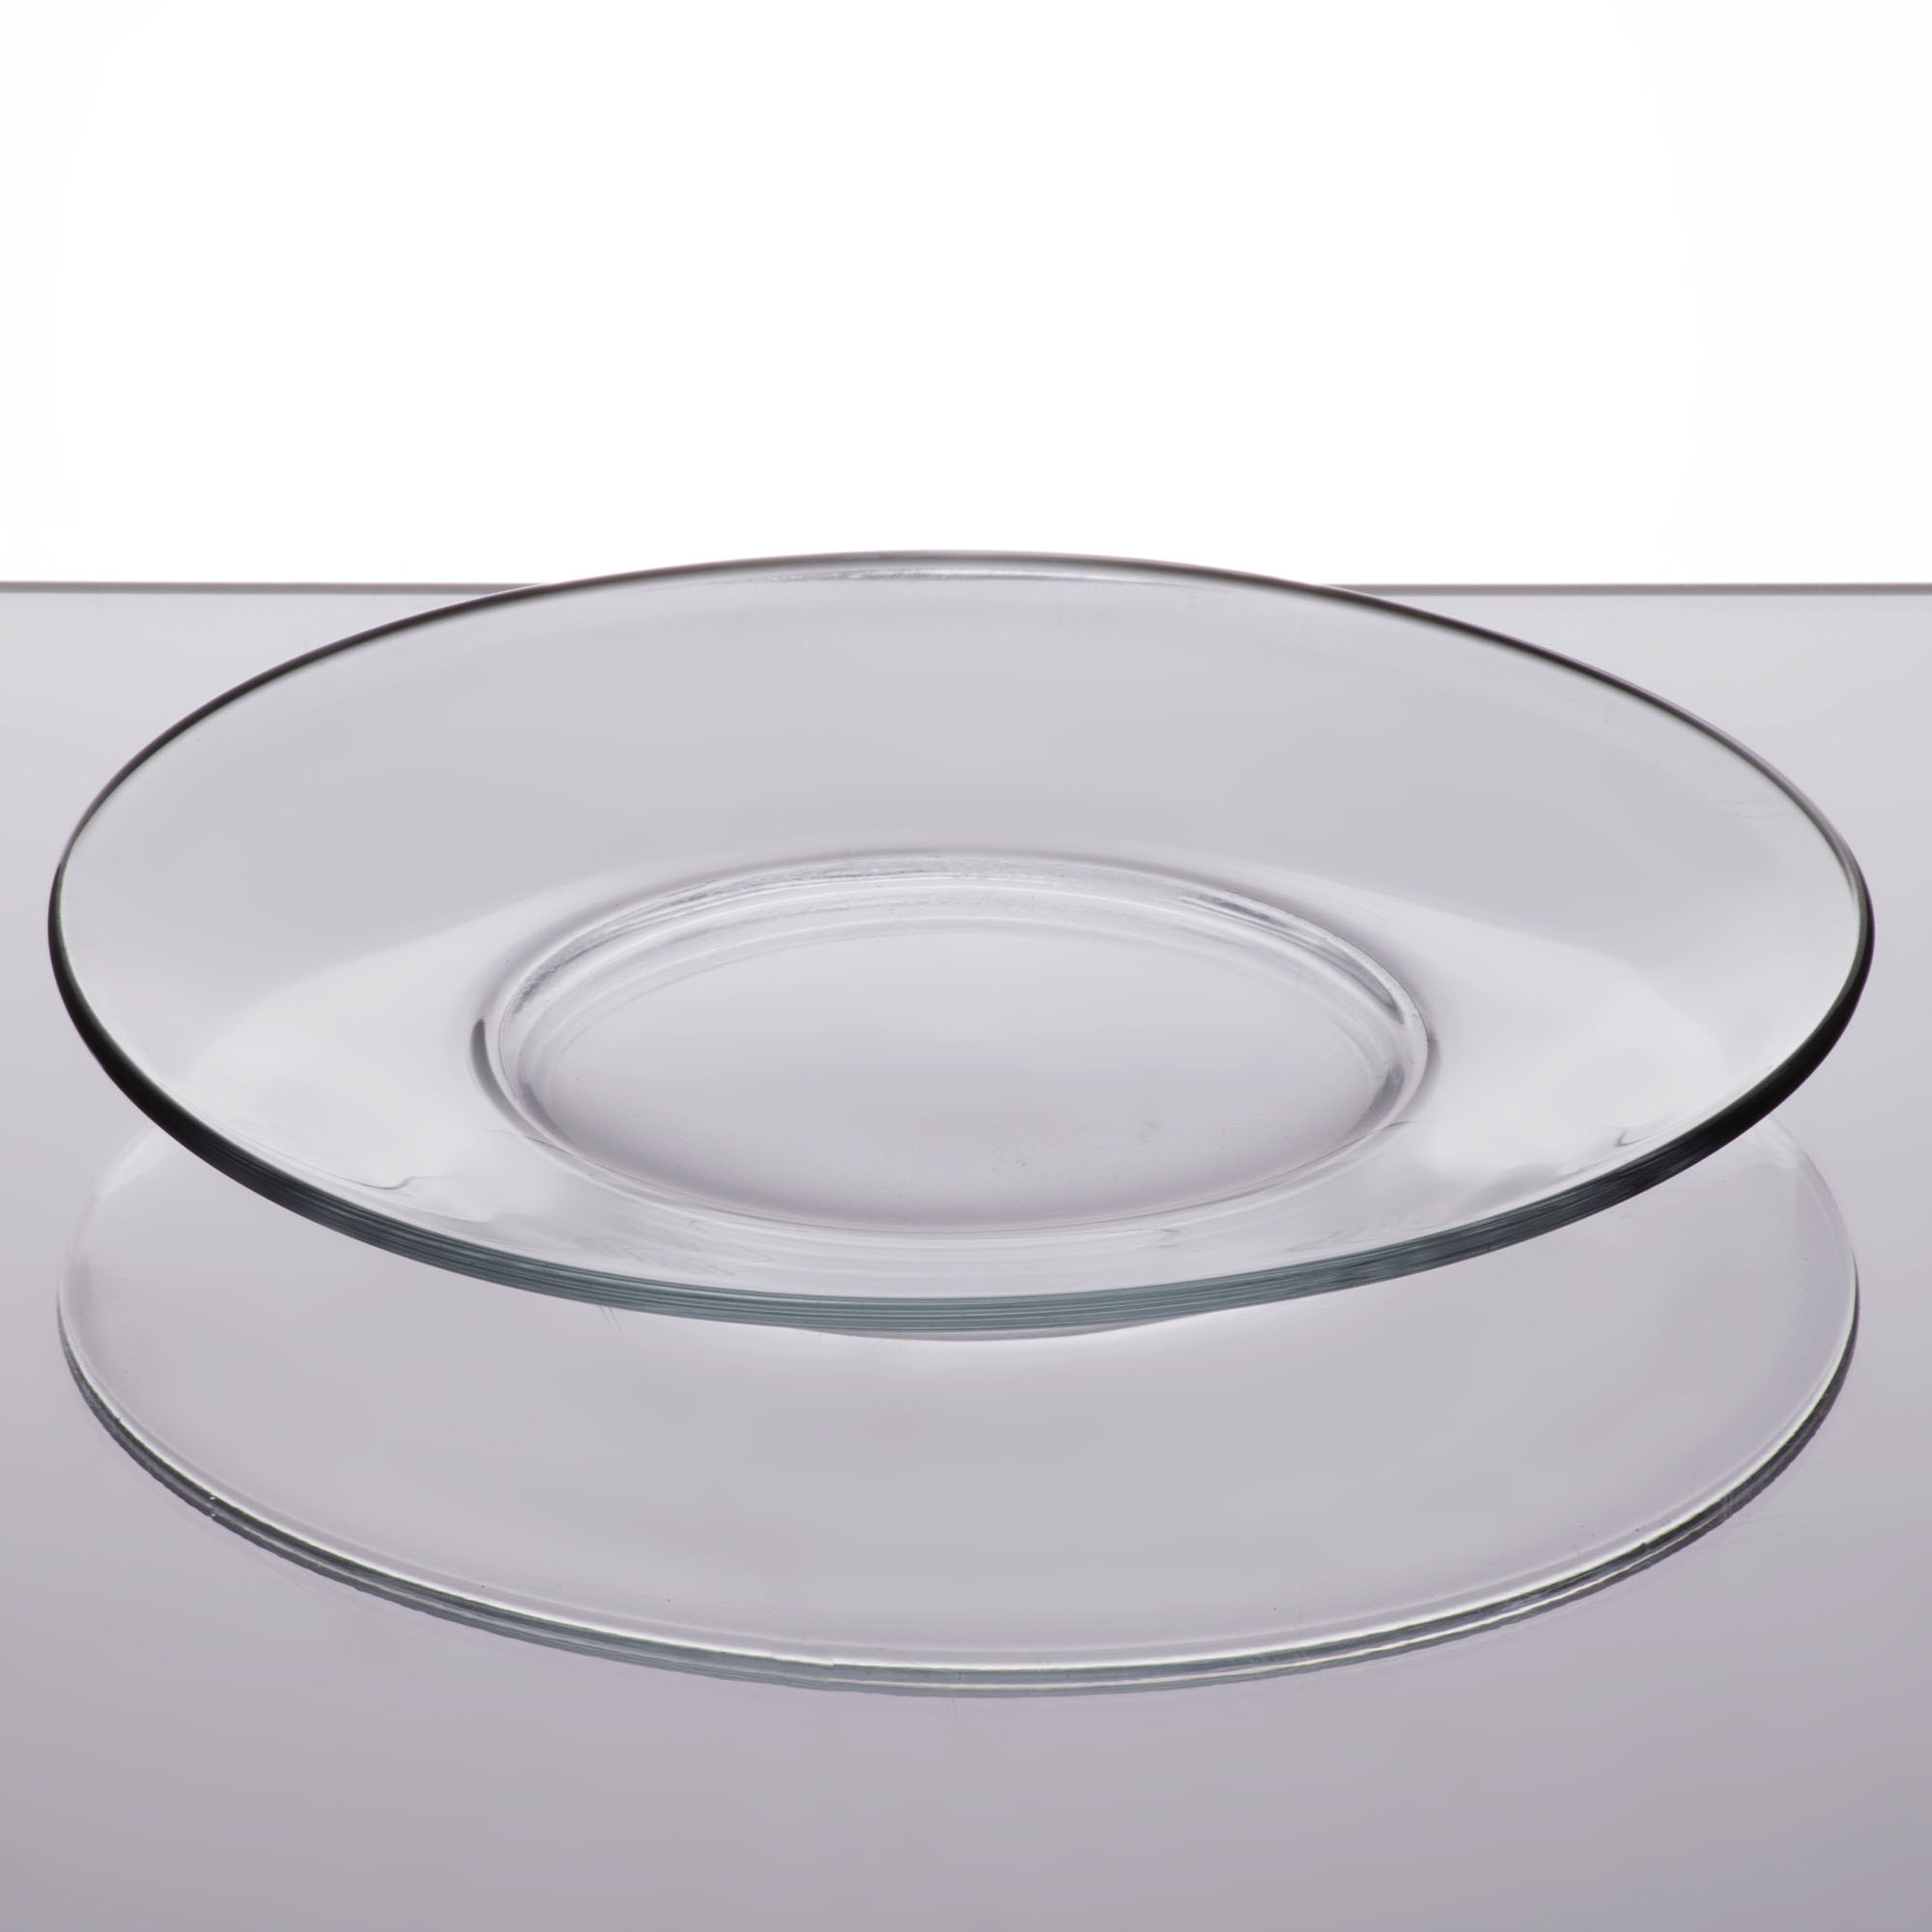 clear glass plates ikea